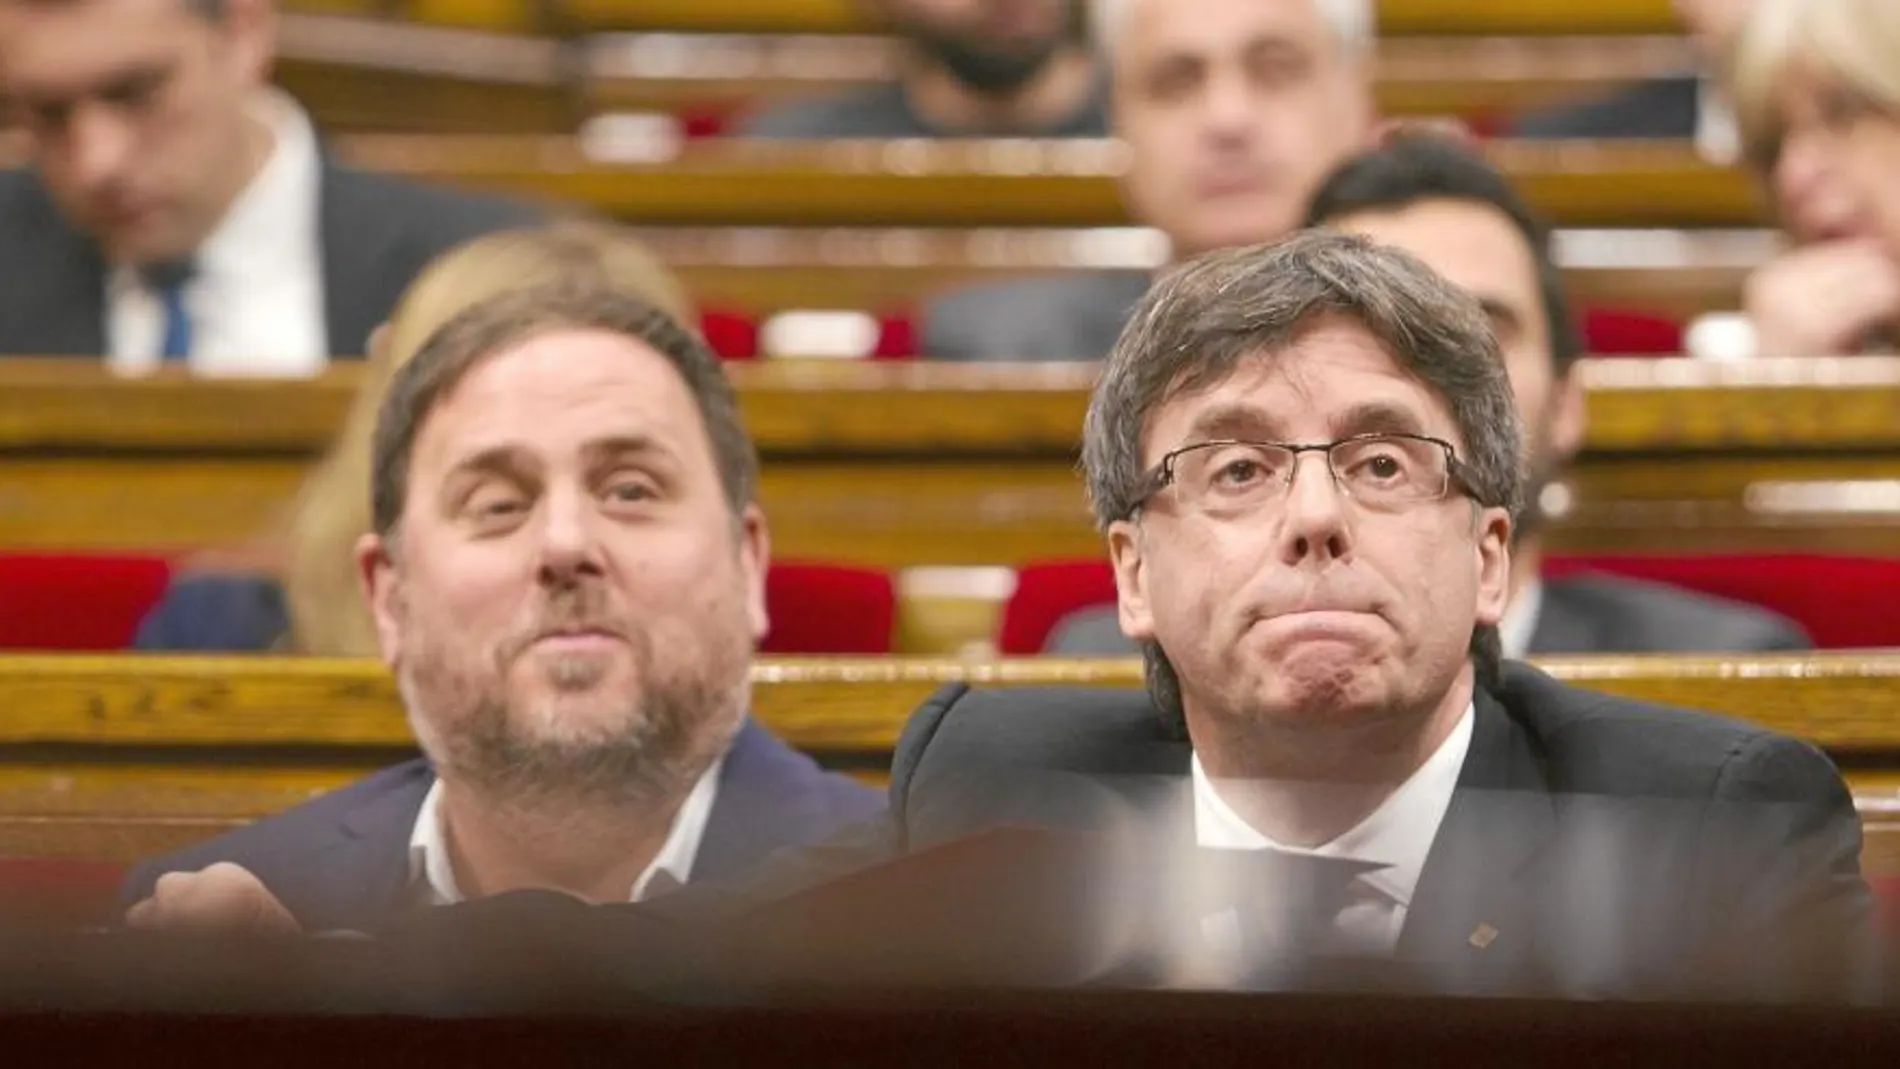 El president de la Generalitat, Carles Puigdemont, junto al vicepresidente, Oriol Junqueras, ayer, en el Parlament